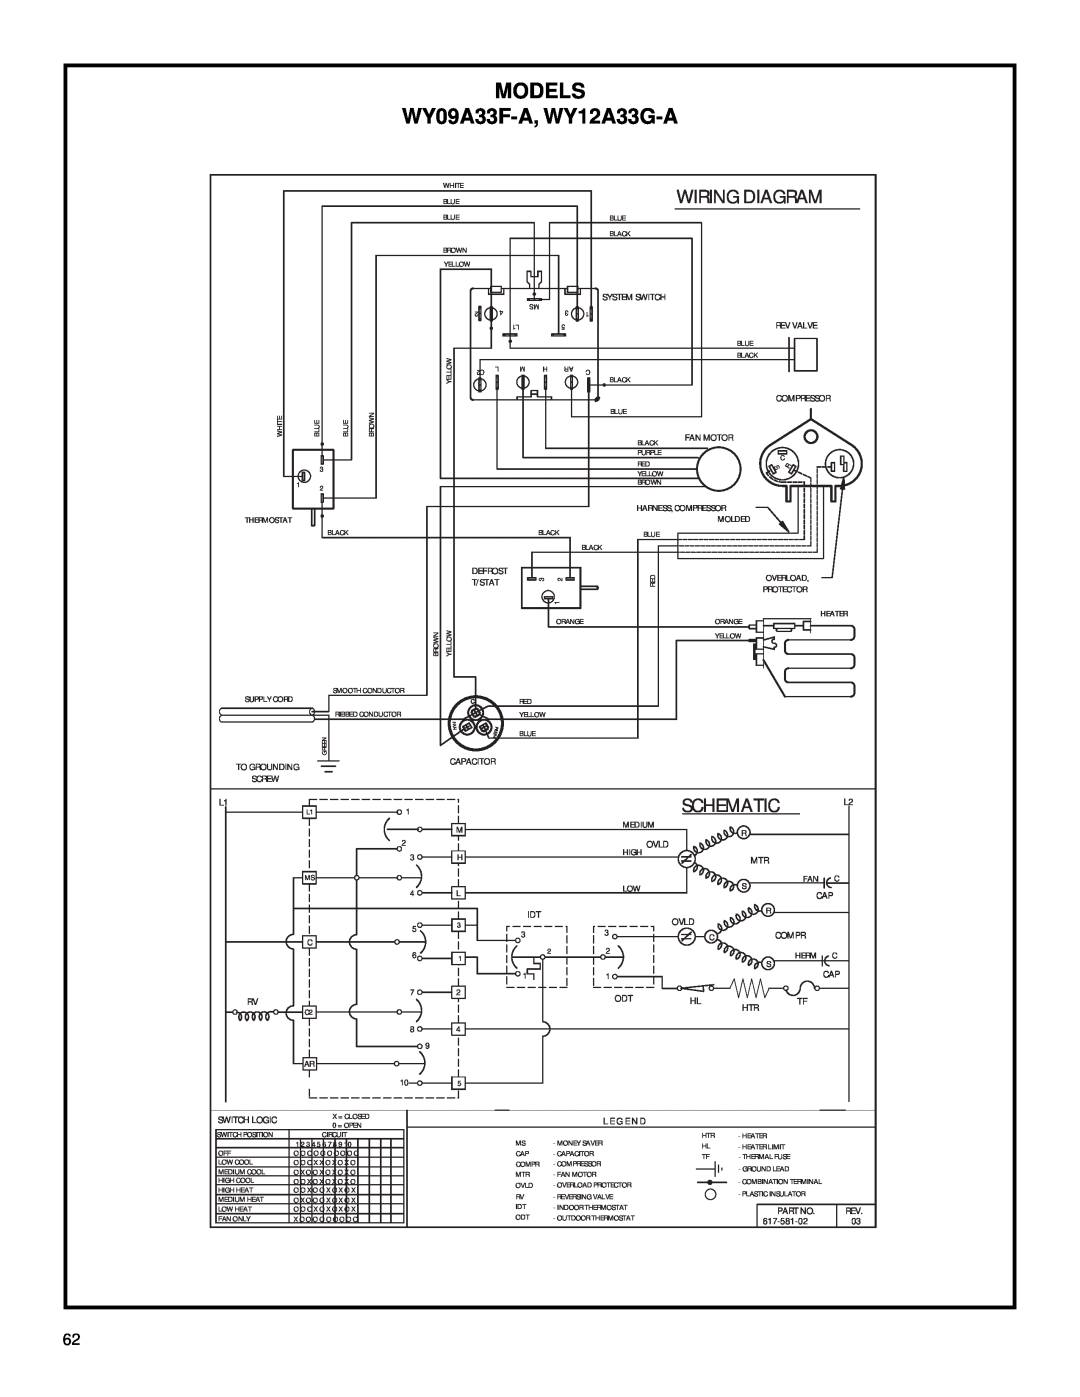 Friedrich racservmn service manual WY09A33F-A, WY12A33G-A, Models, Wiring Diagram, Schematic 